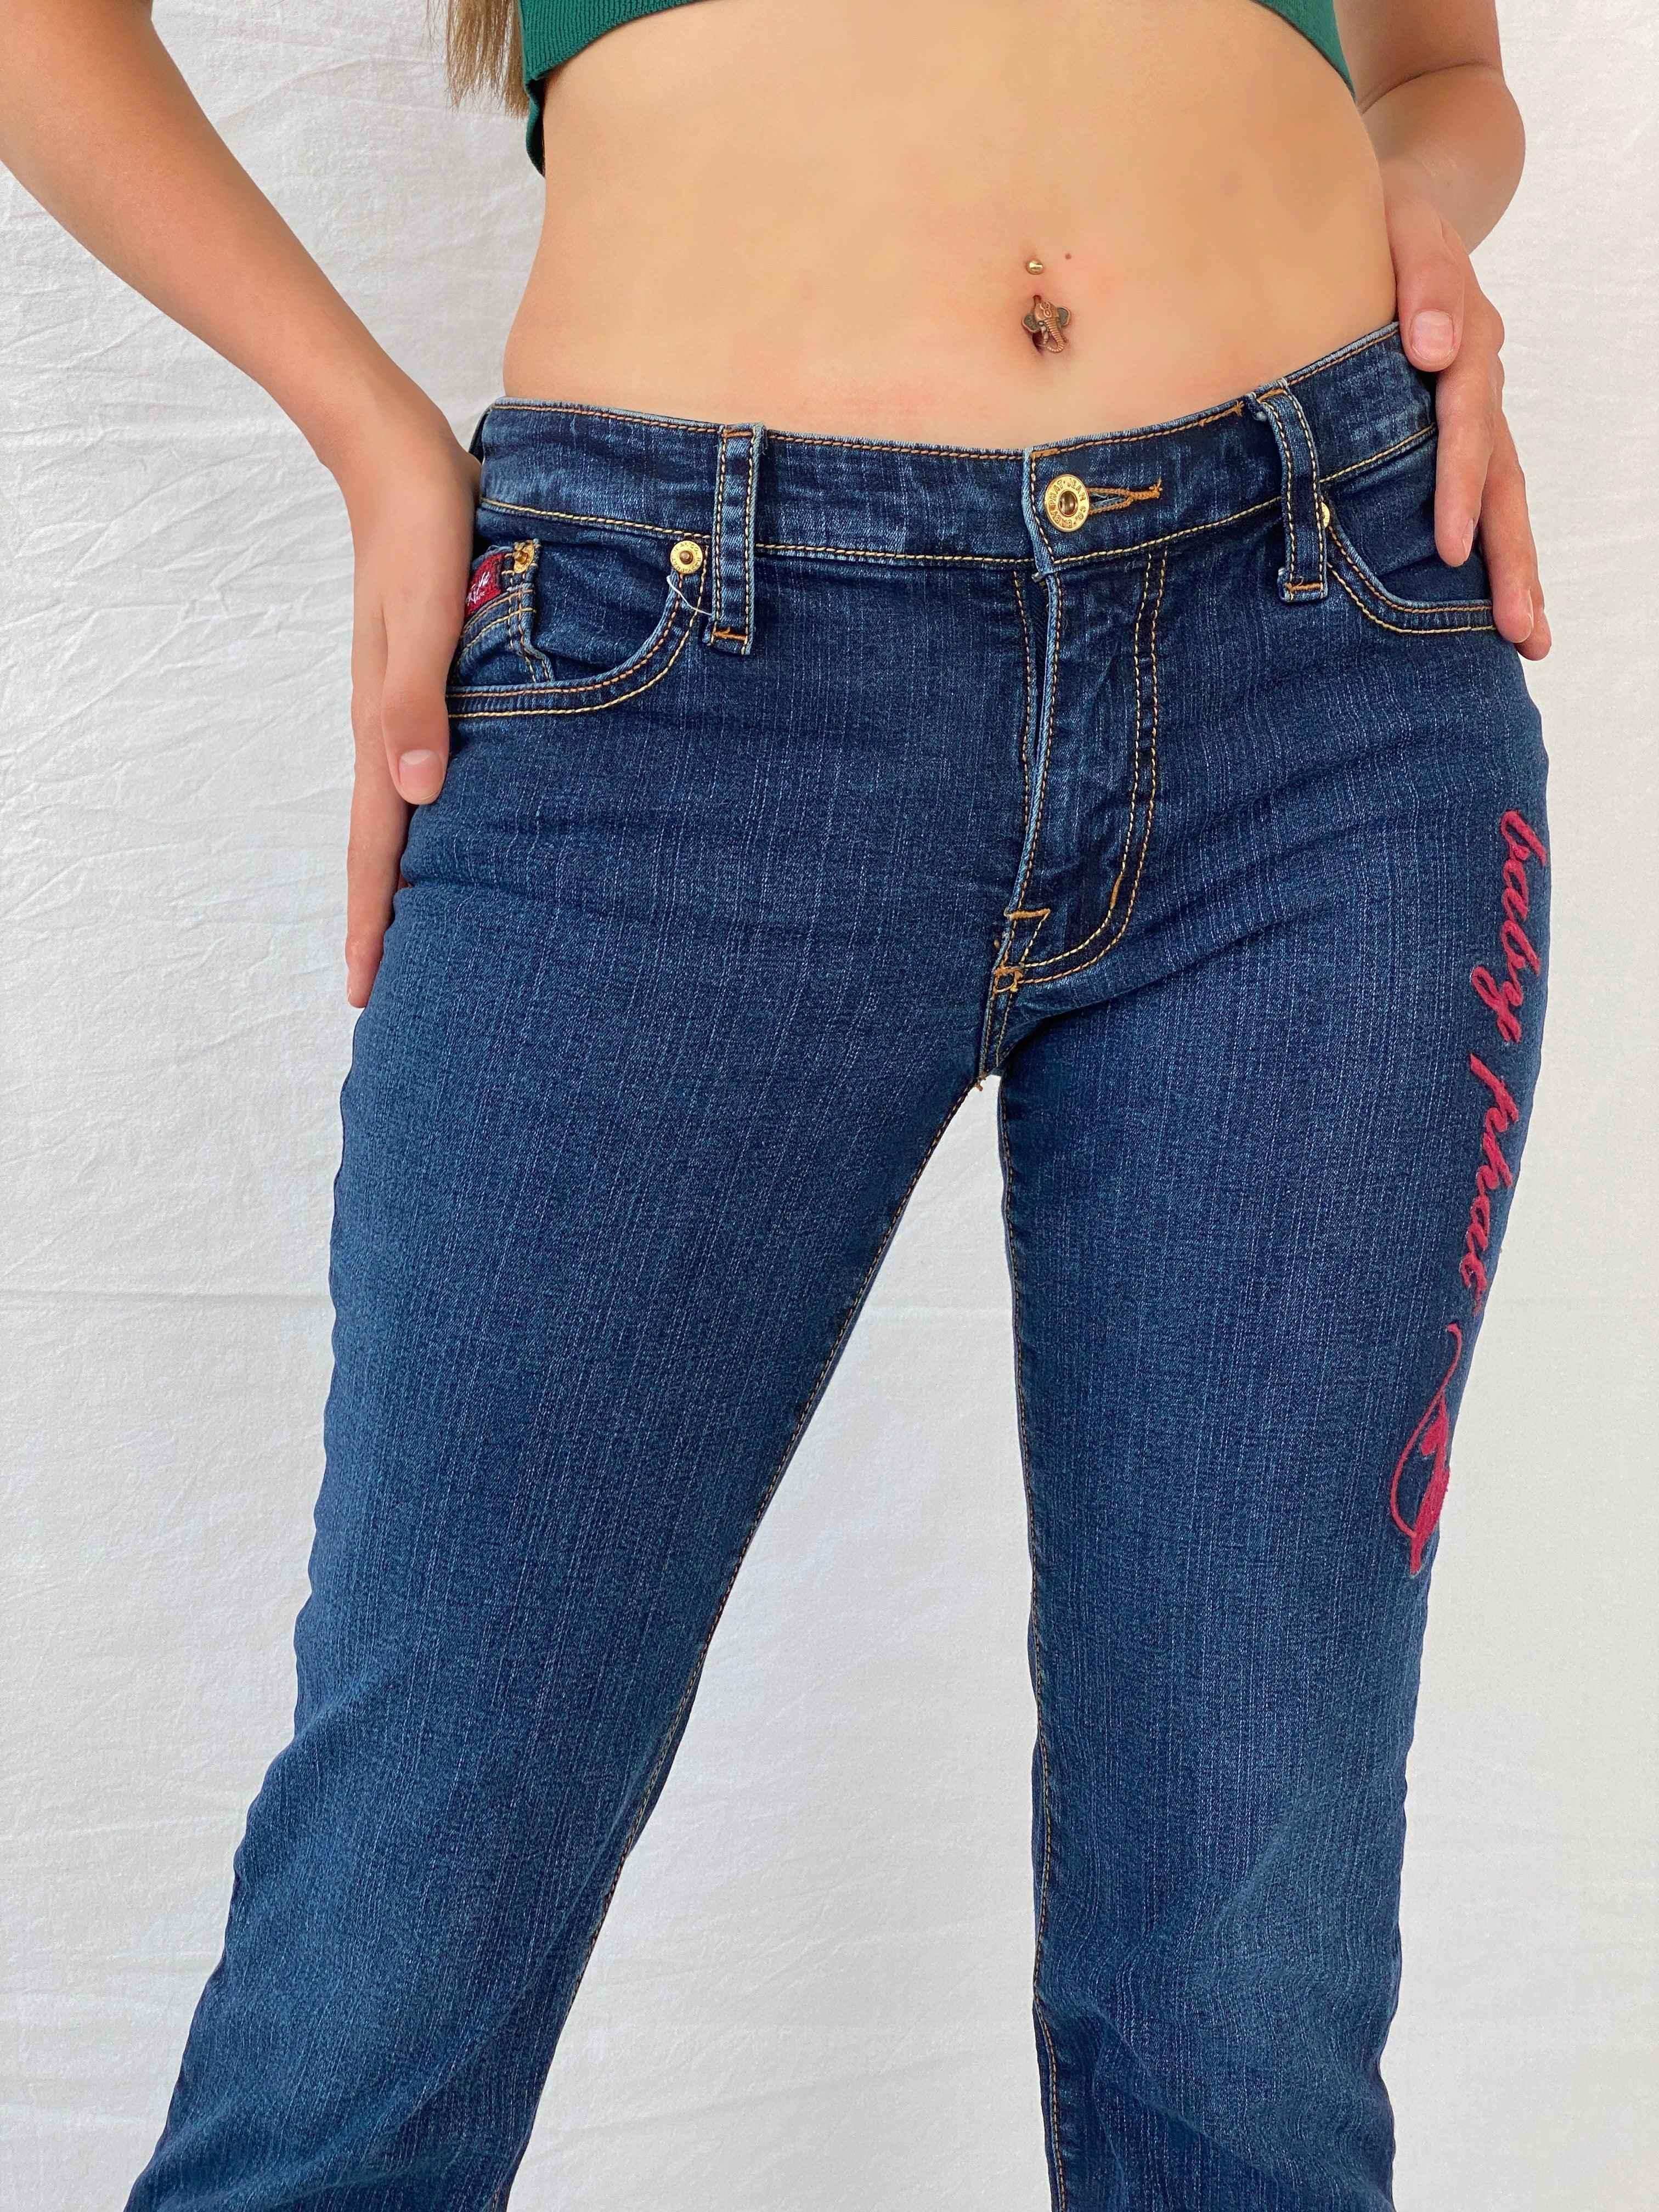 Y2K Baby Phat Low Rise Jeans - Balagan Vintage Jeans 00s, 90s, baby phat, jeans, low rise, low rise jeans, Mira